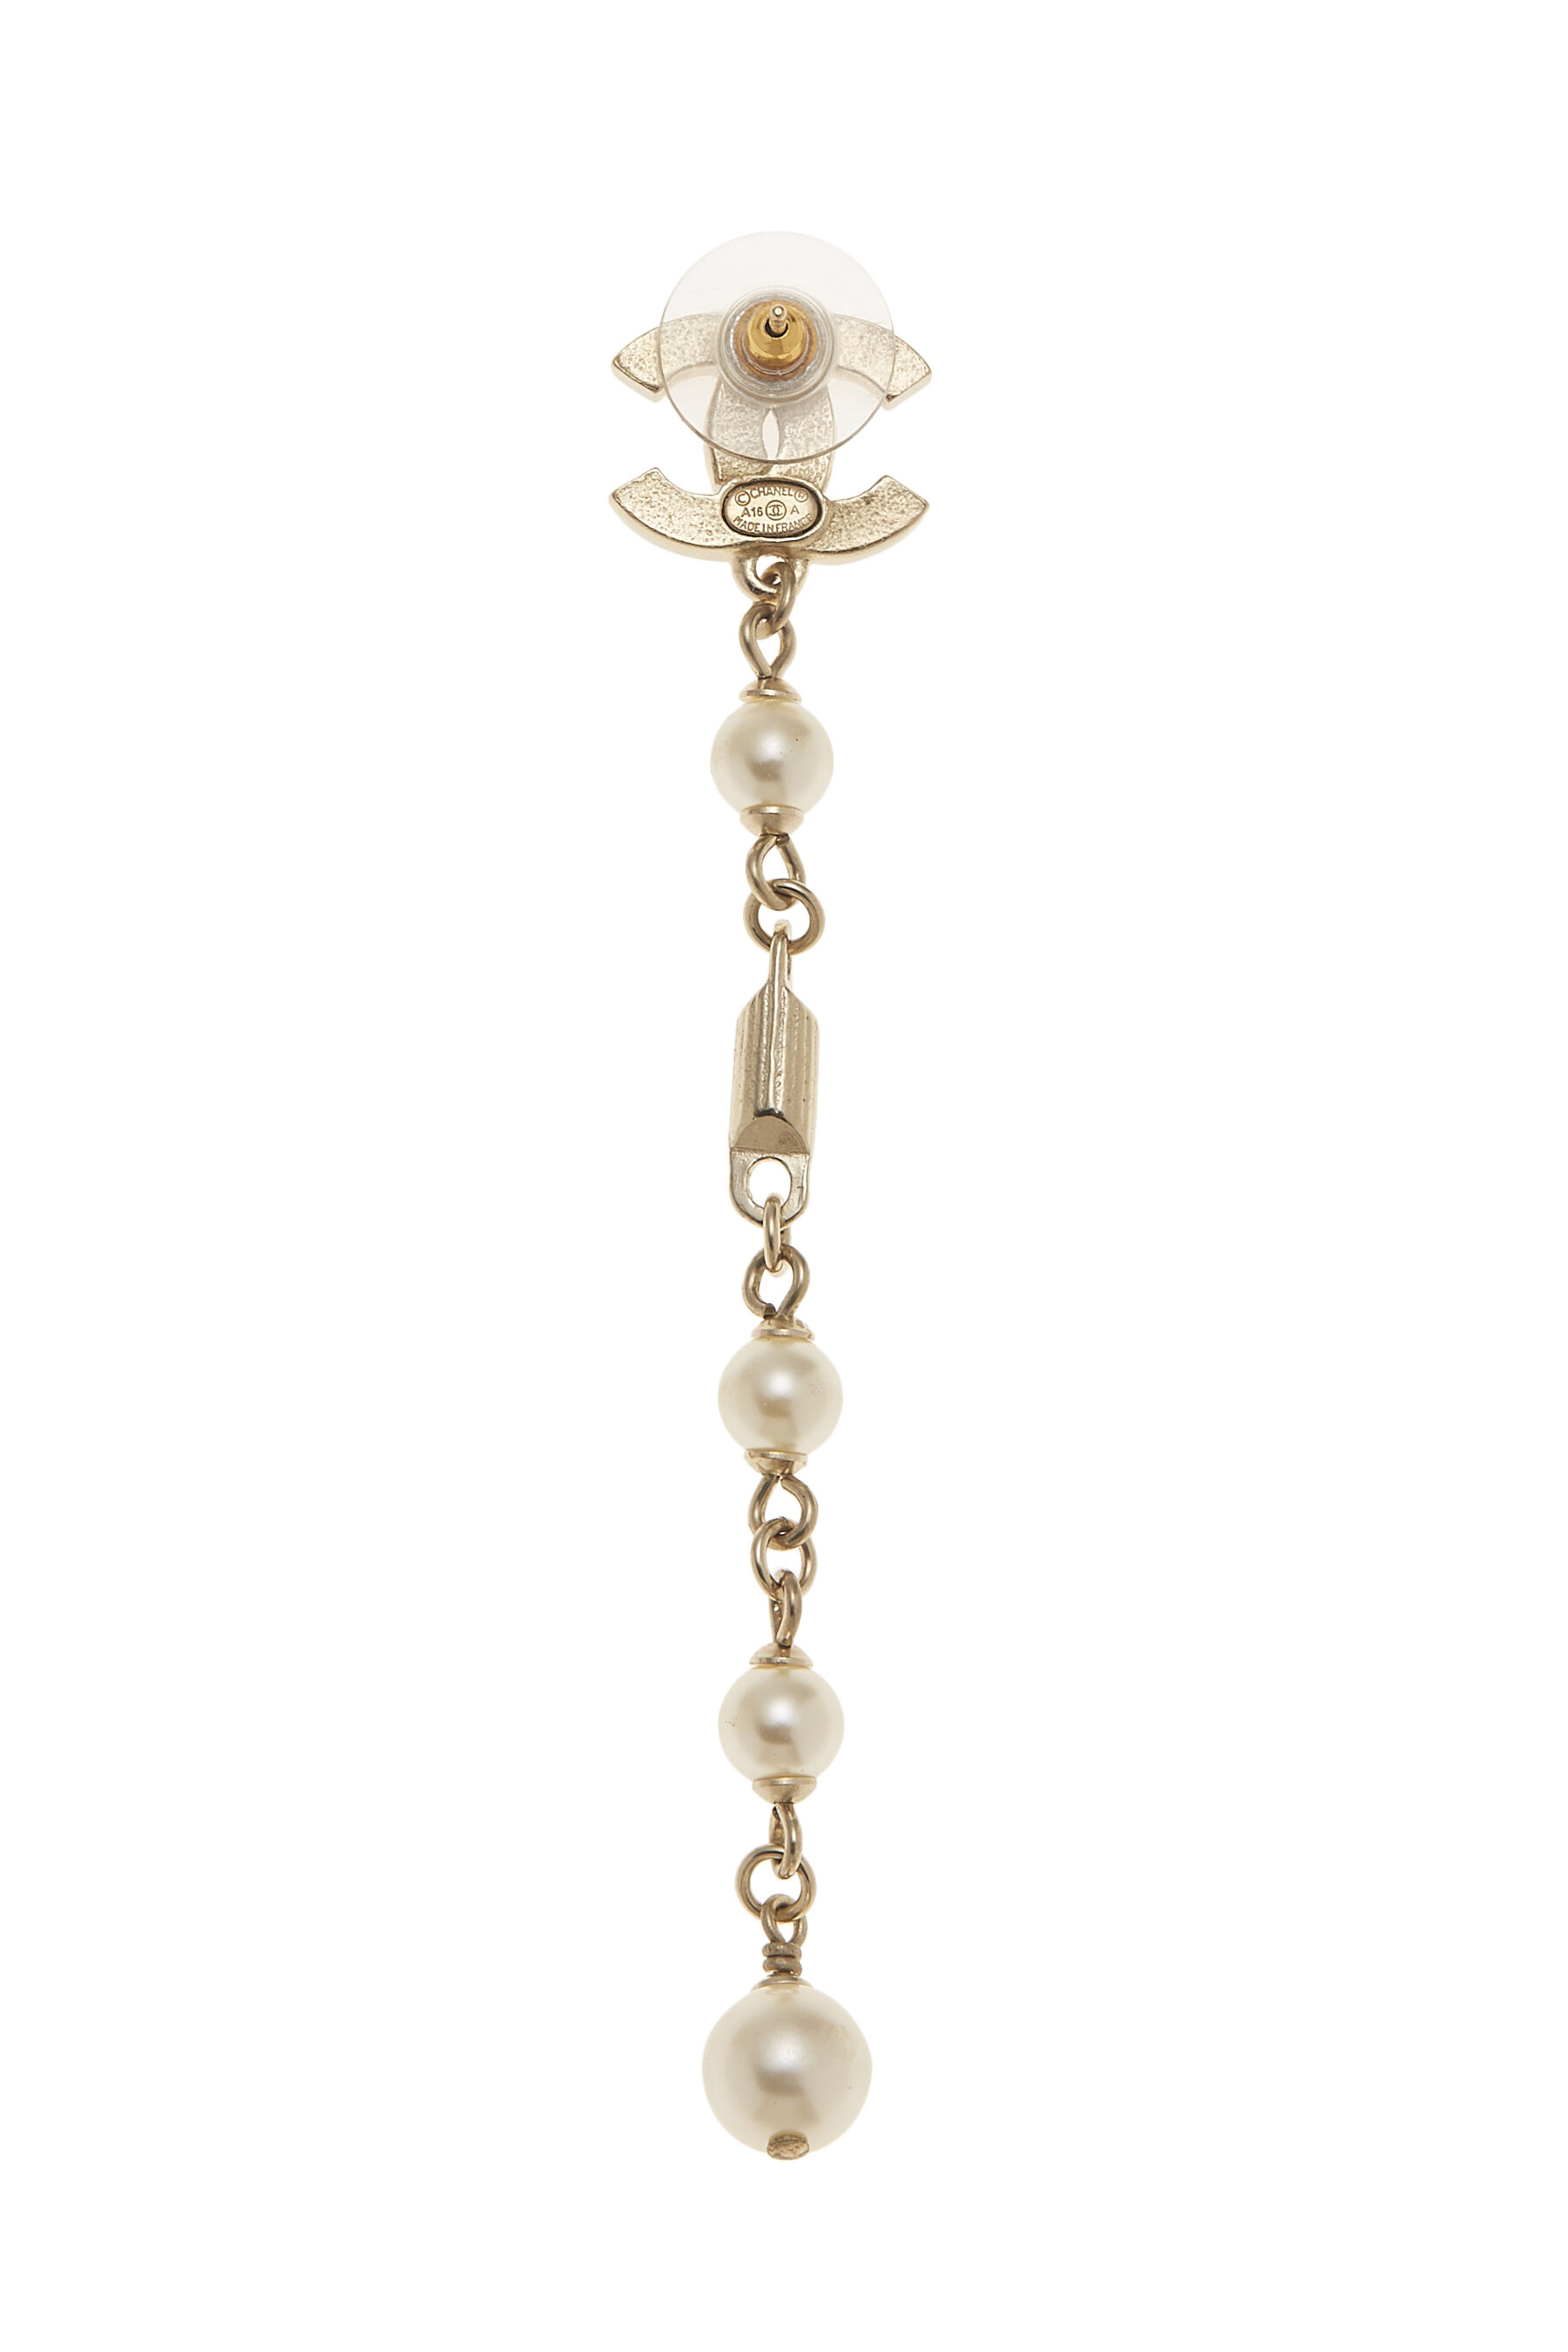 Chanel Gold & Faux Pearl Dangle Flap Bag Earrings Small Q6J4MG17DH000